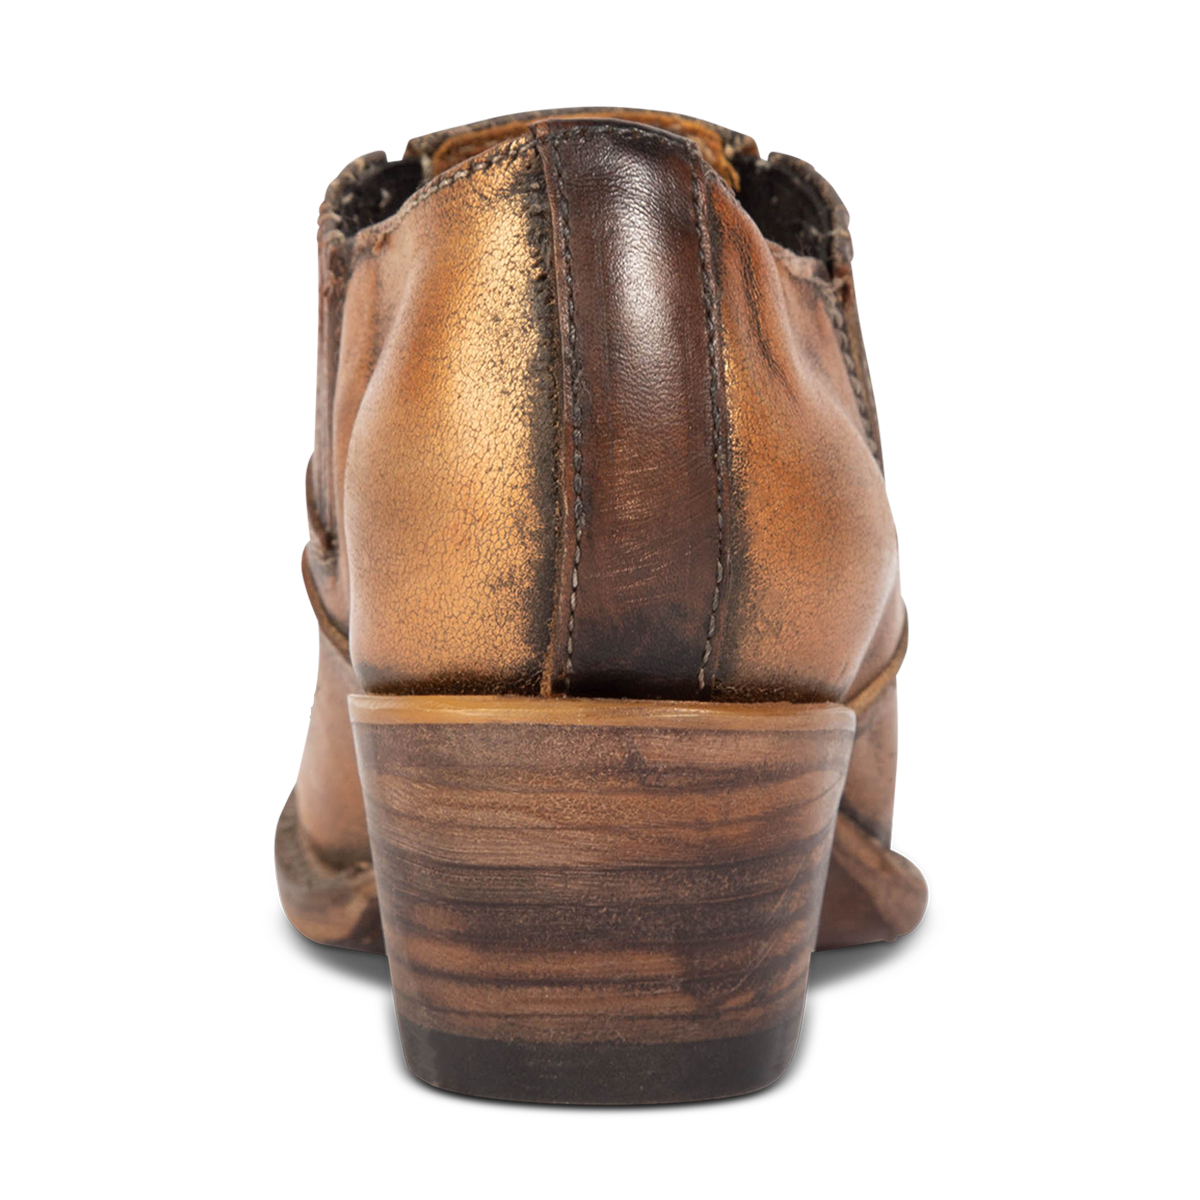 Back view showing stacked wooden heel on FREEBIRD women's Wyoming bronze western shoe